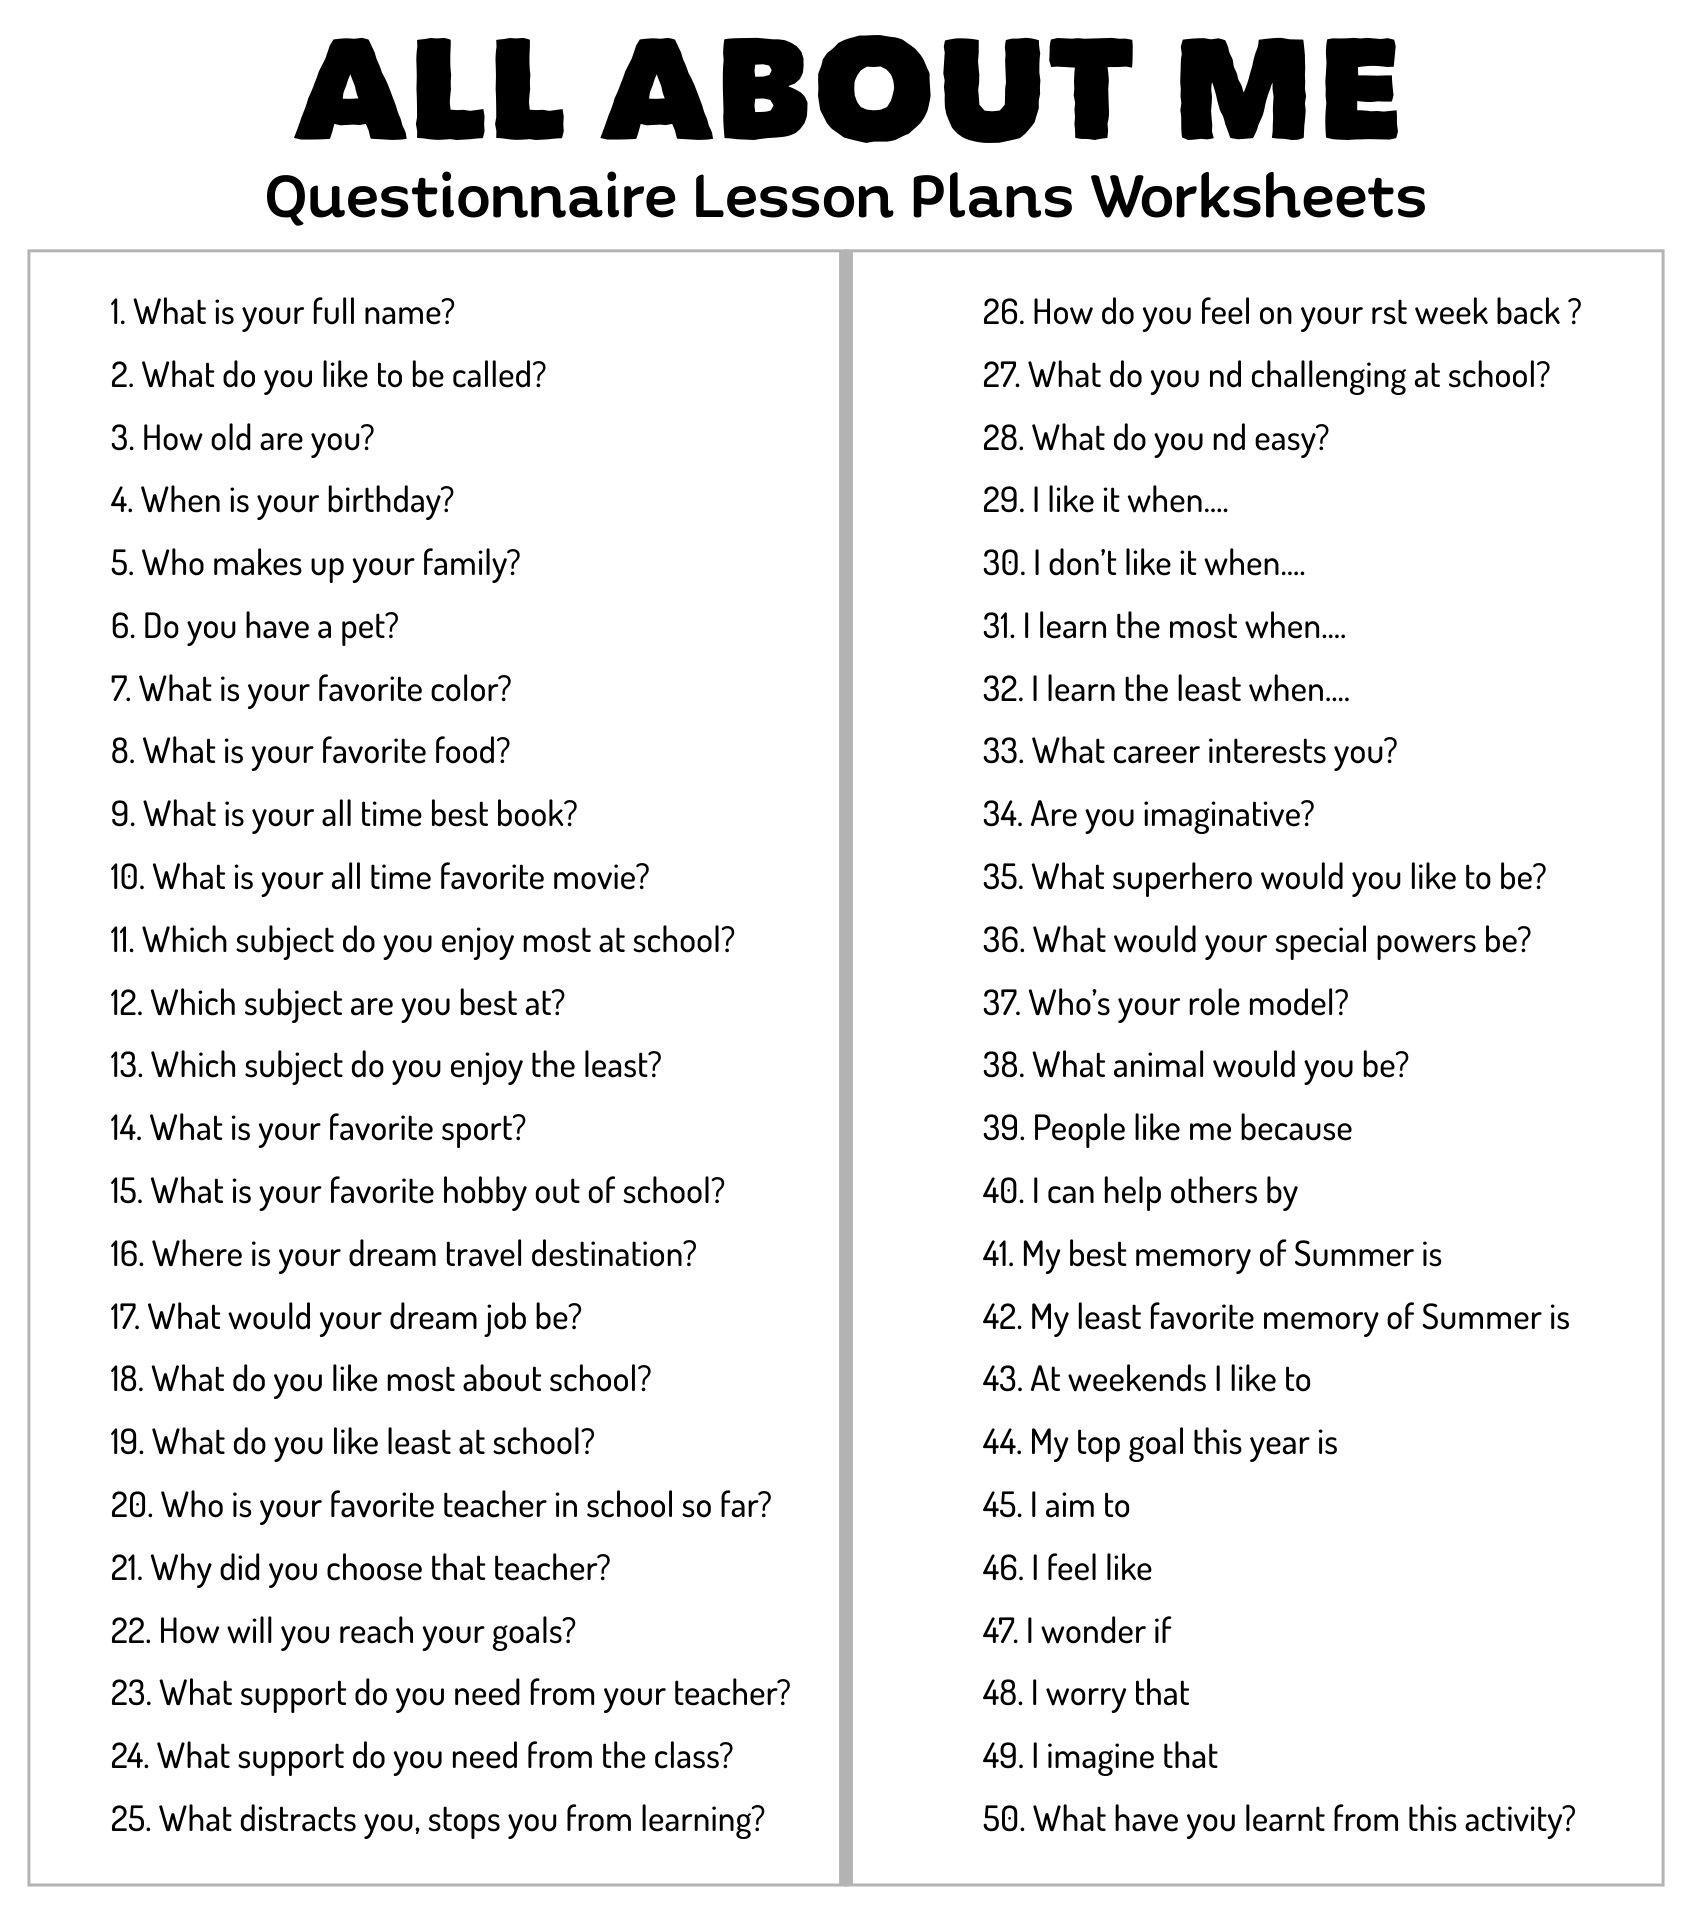 All About Me Questionnaire Lesson Plans Worksheets